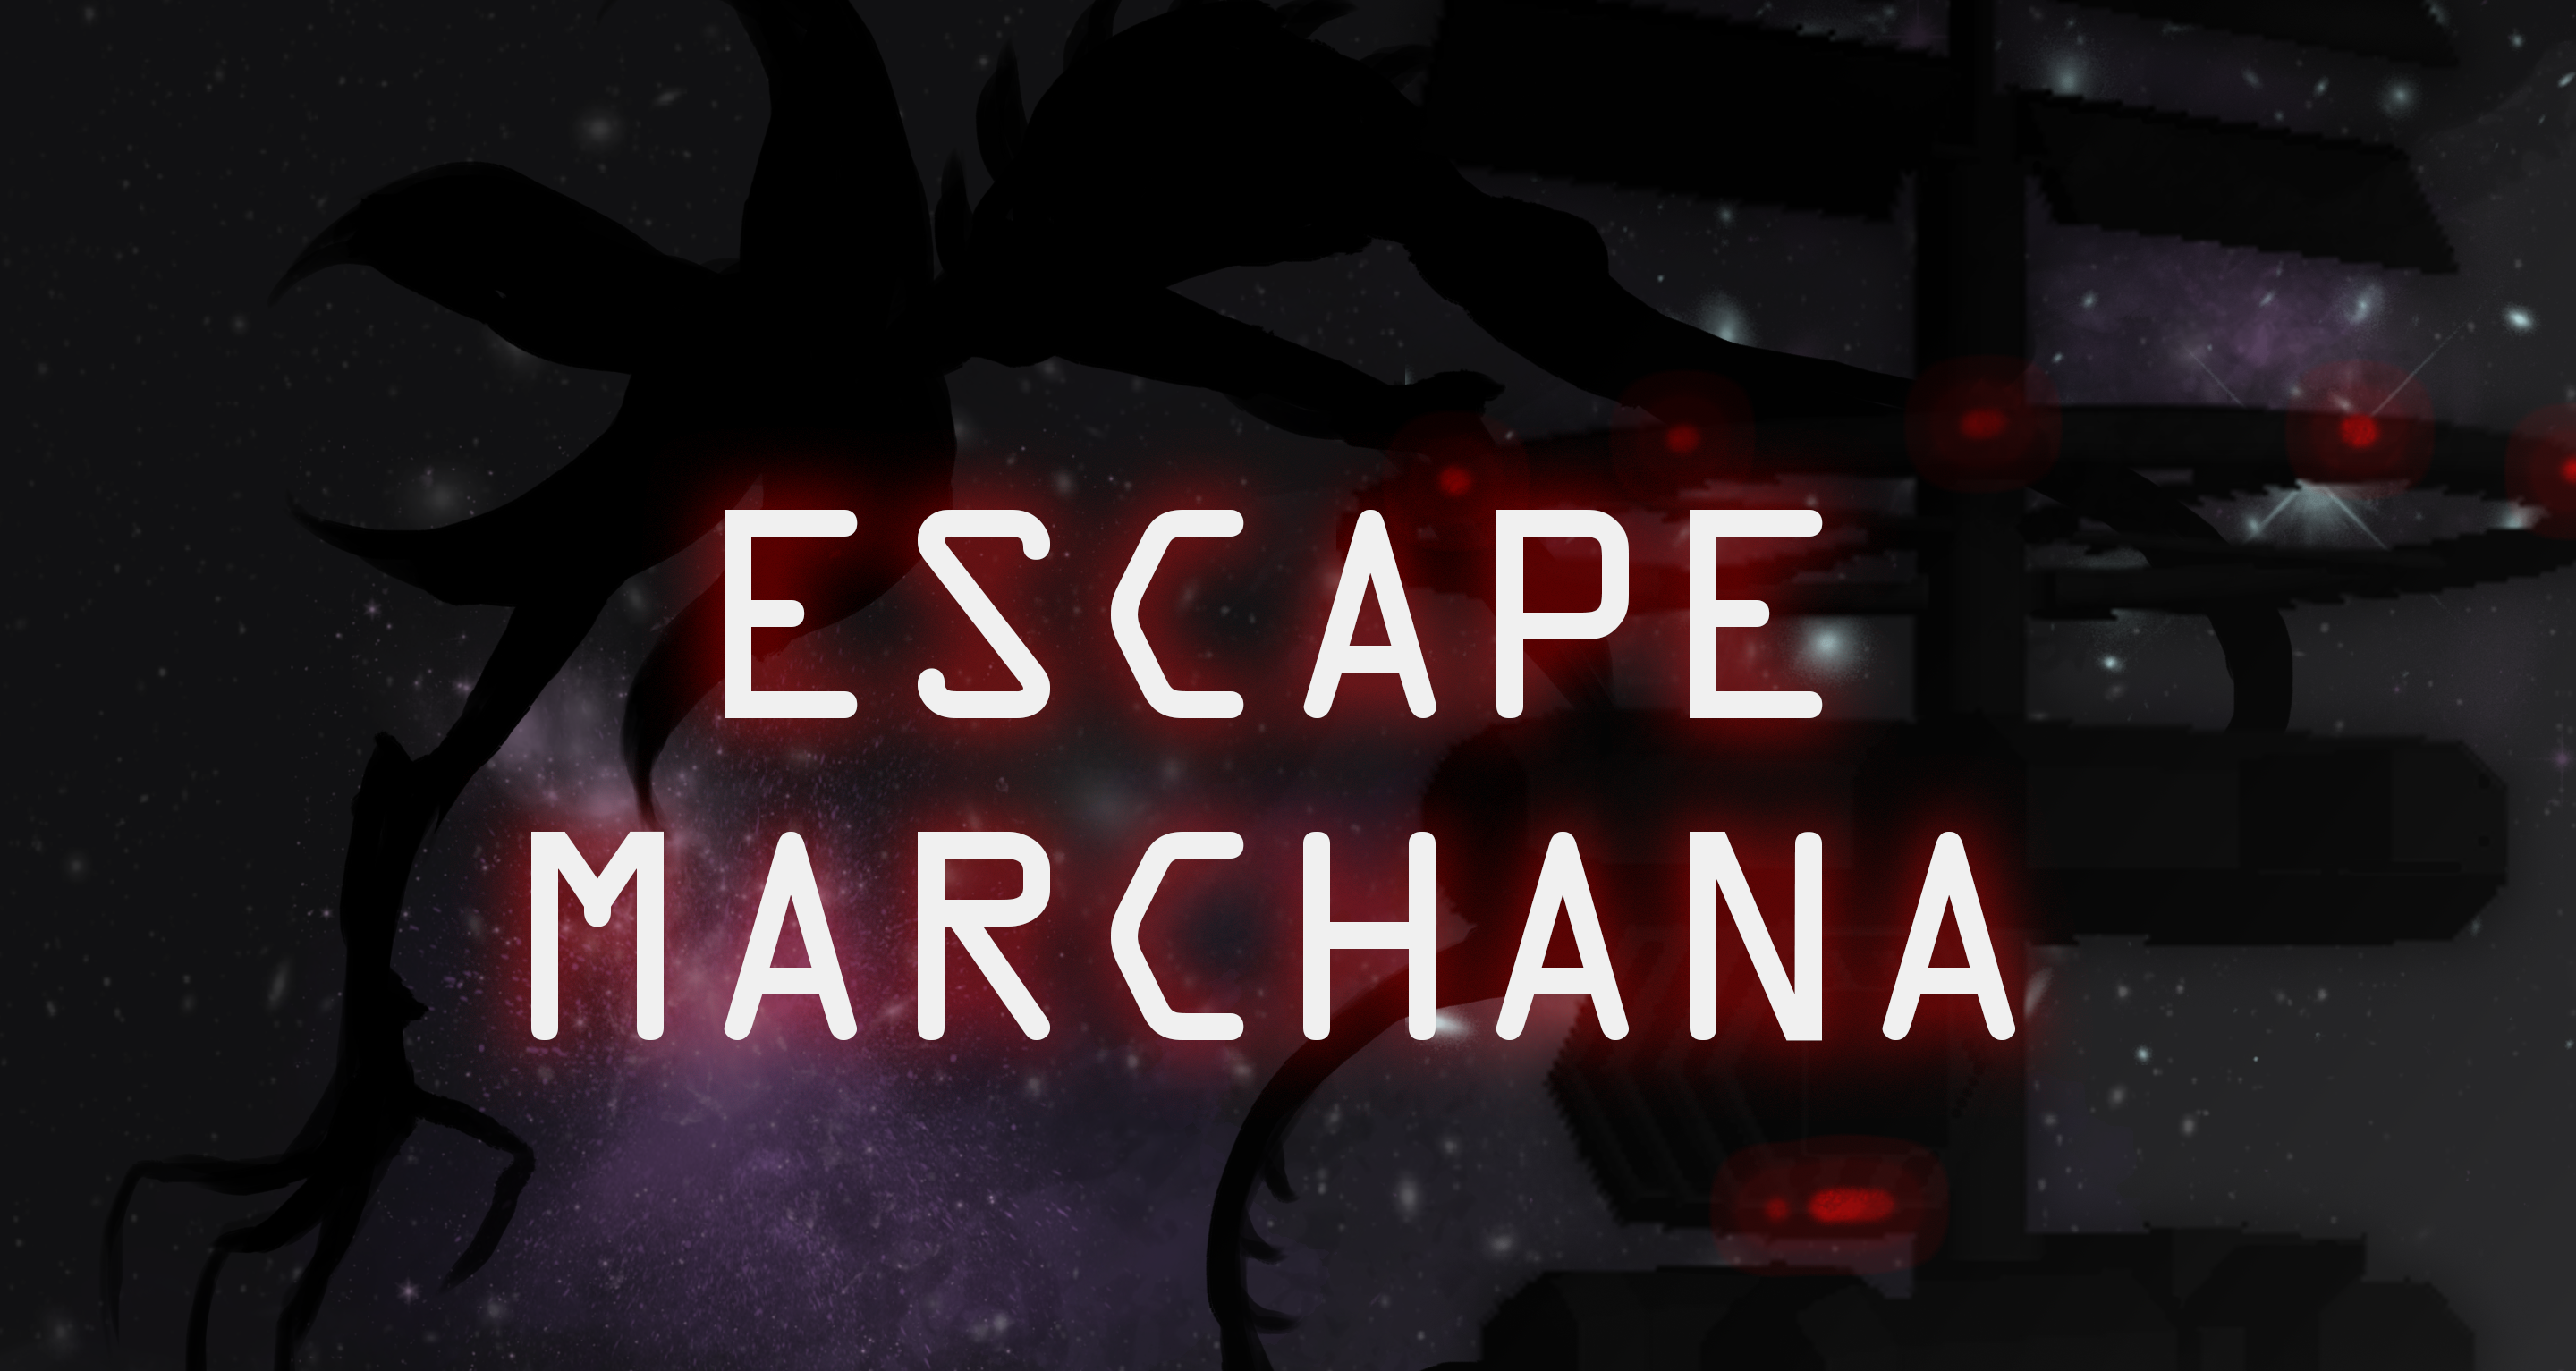 Escape Marchana